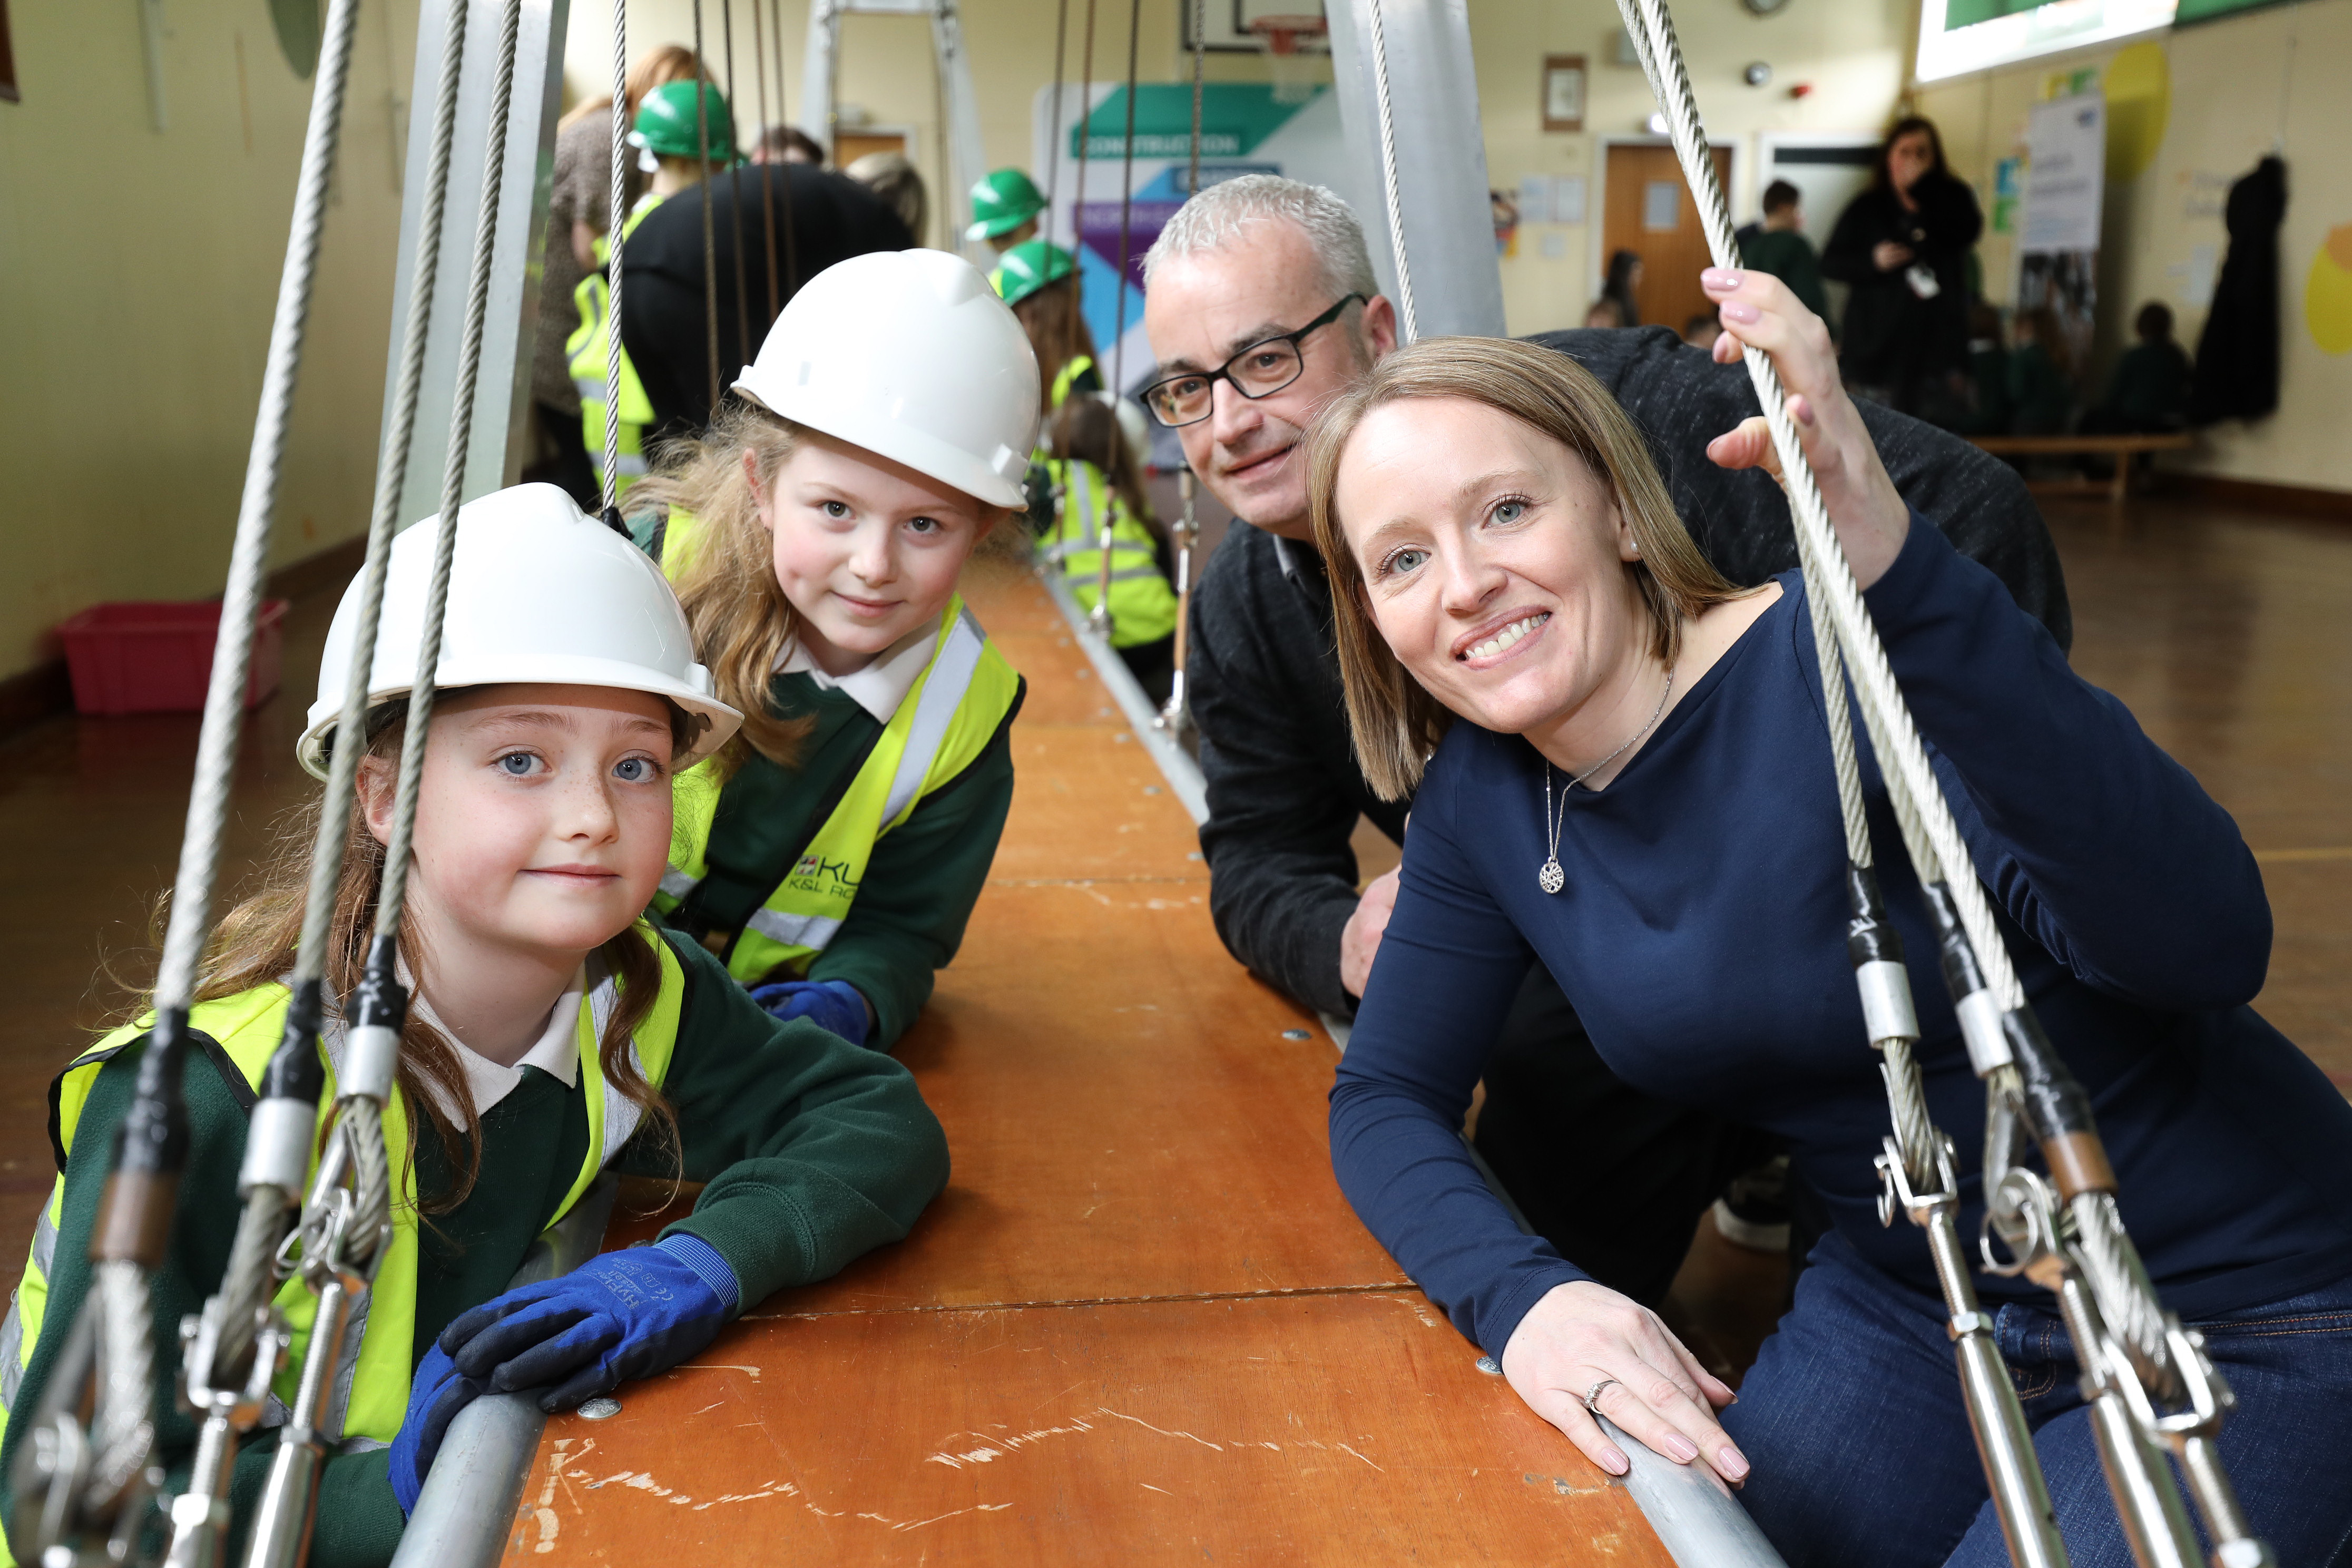 Aberdeen pupils gain insight into construction career opportunities